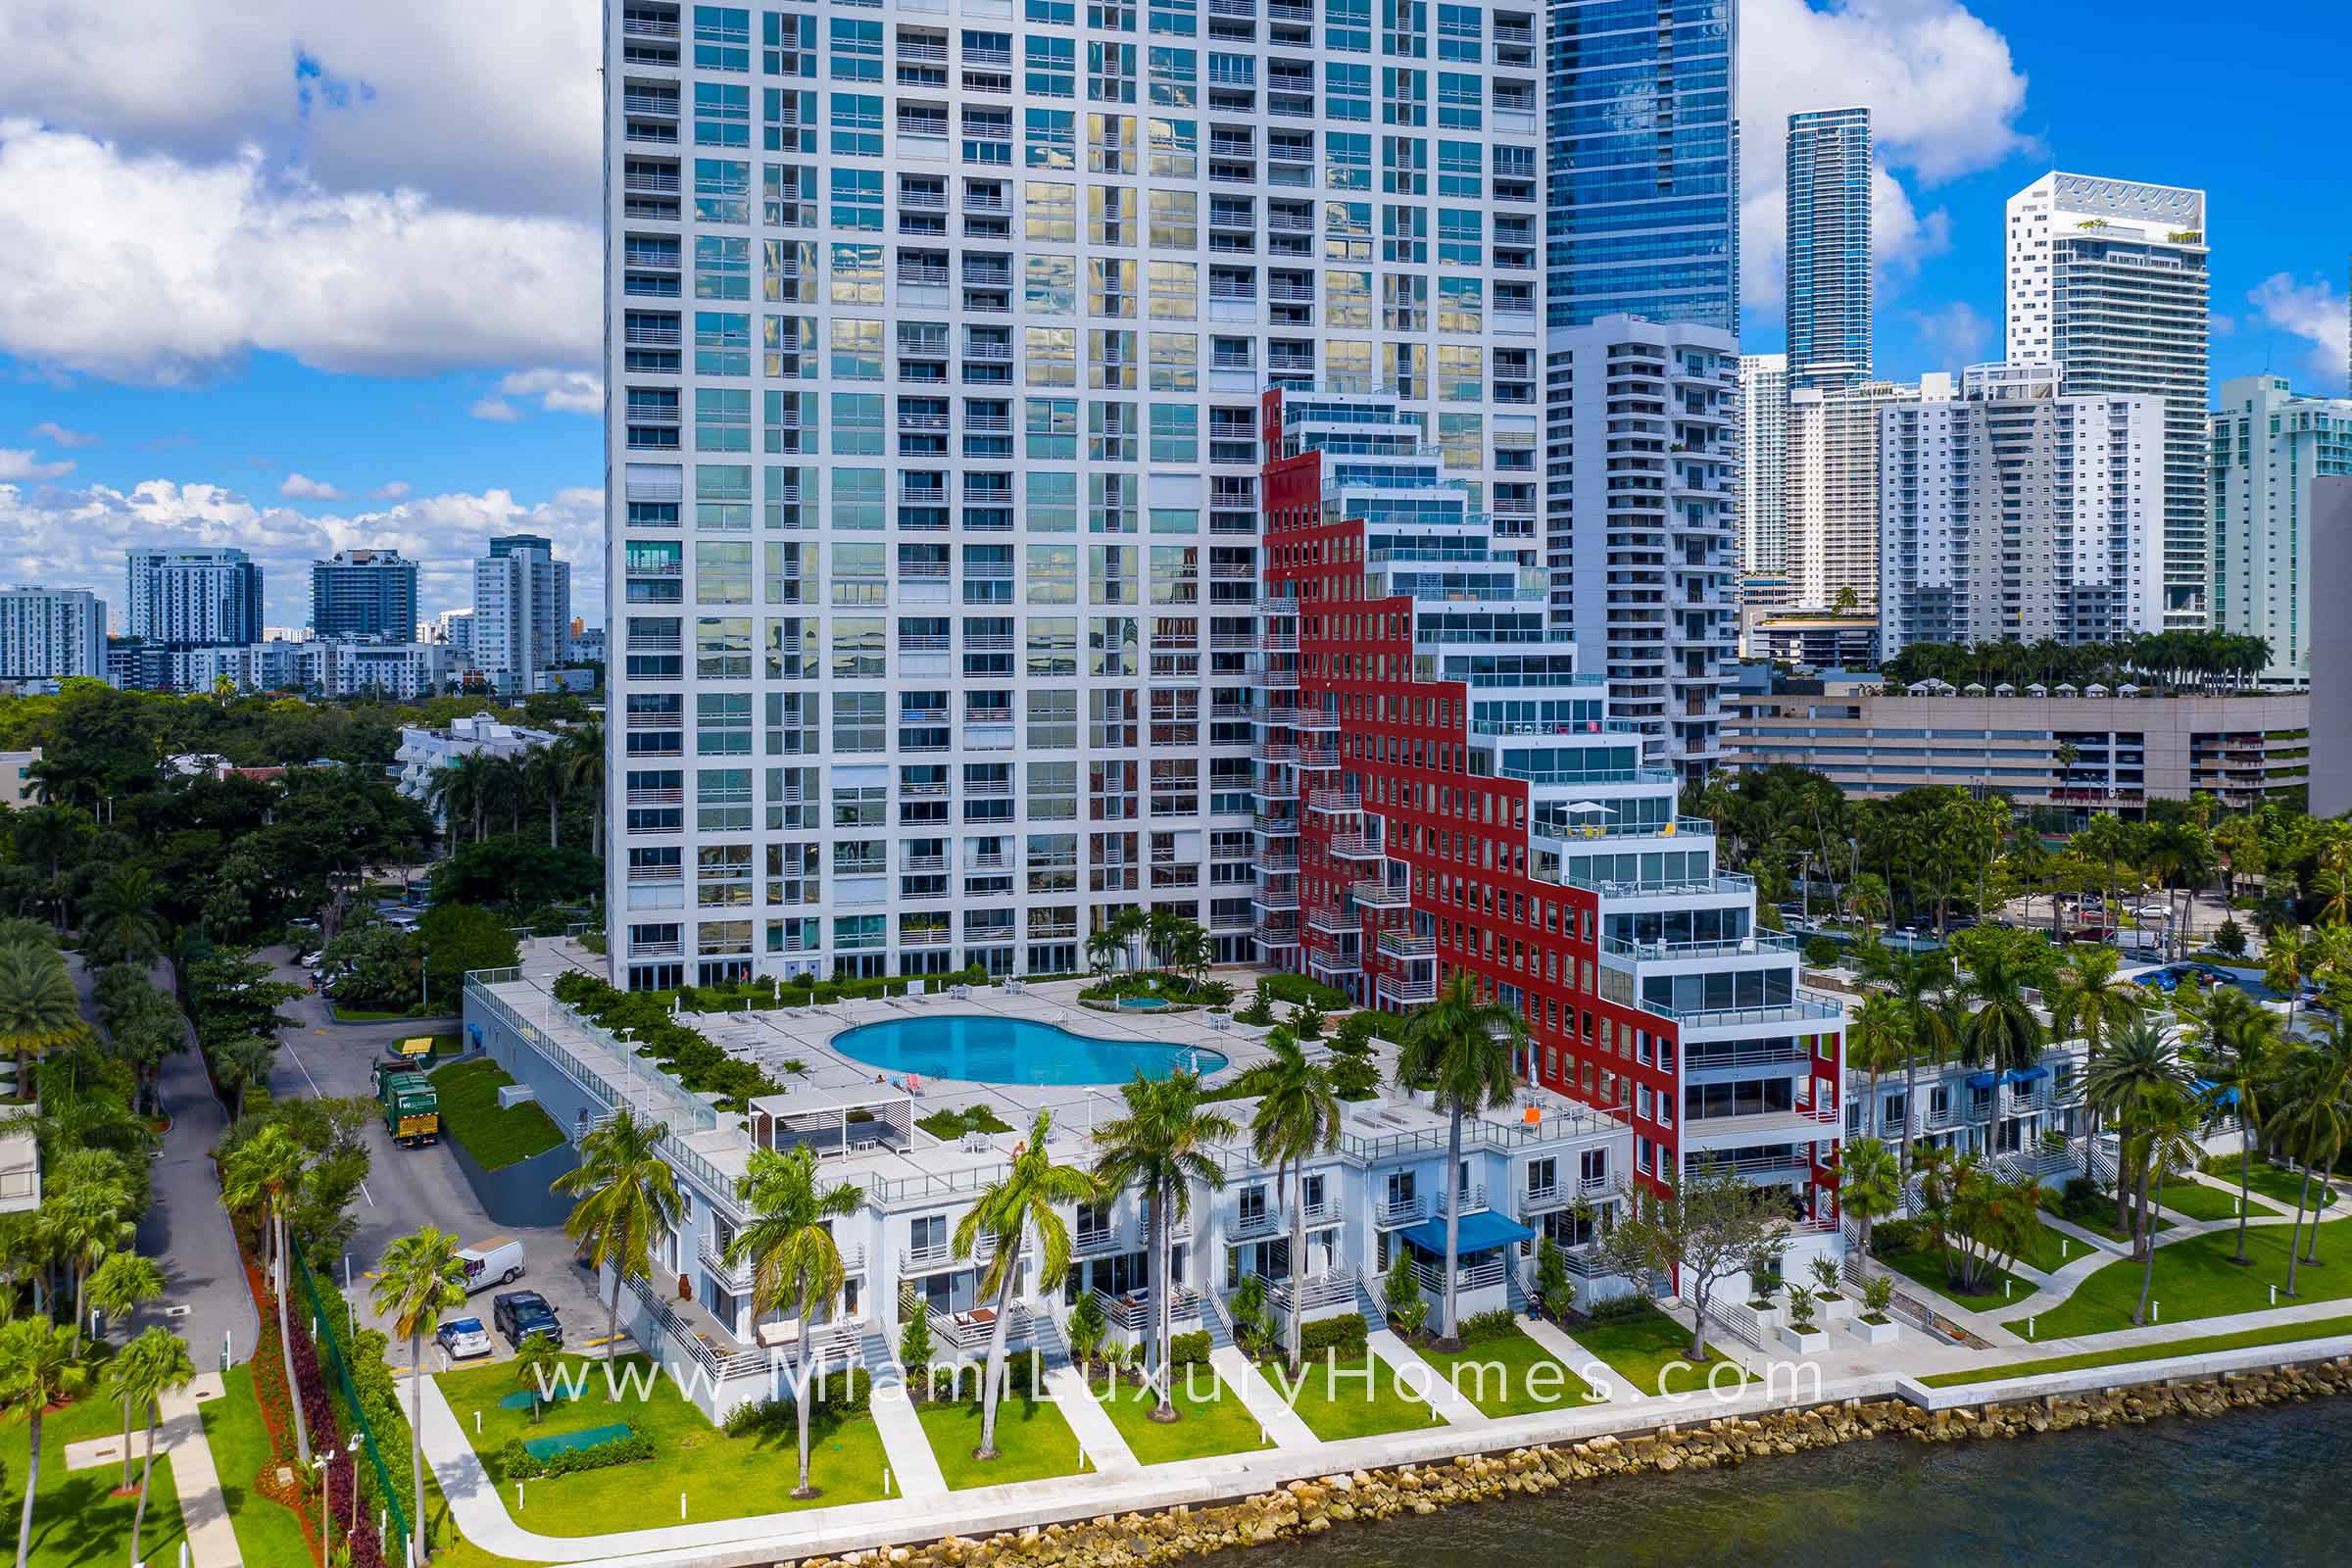 The Palace Condos in Miami